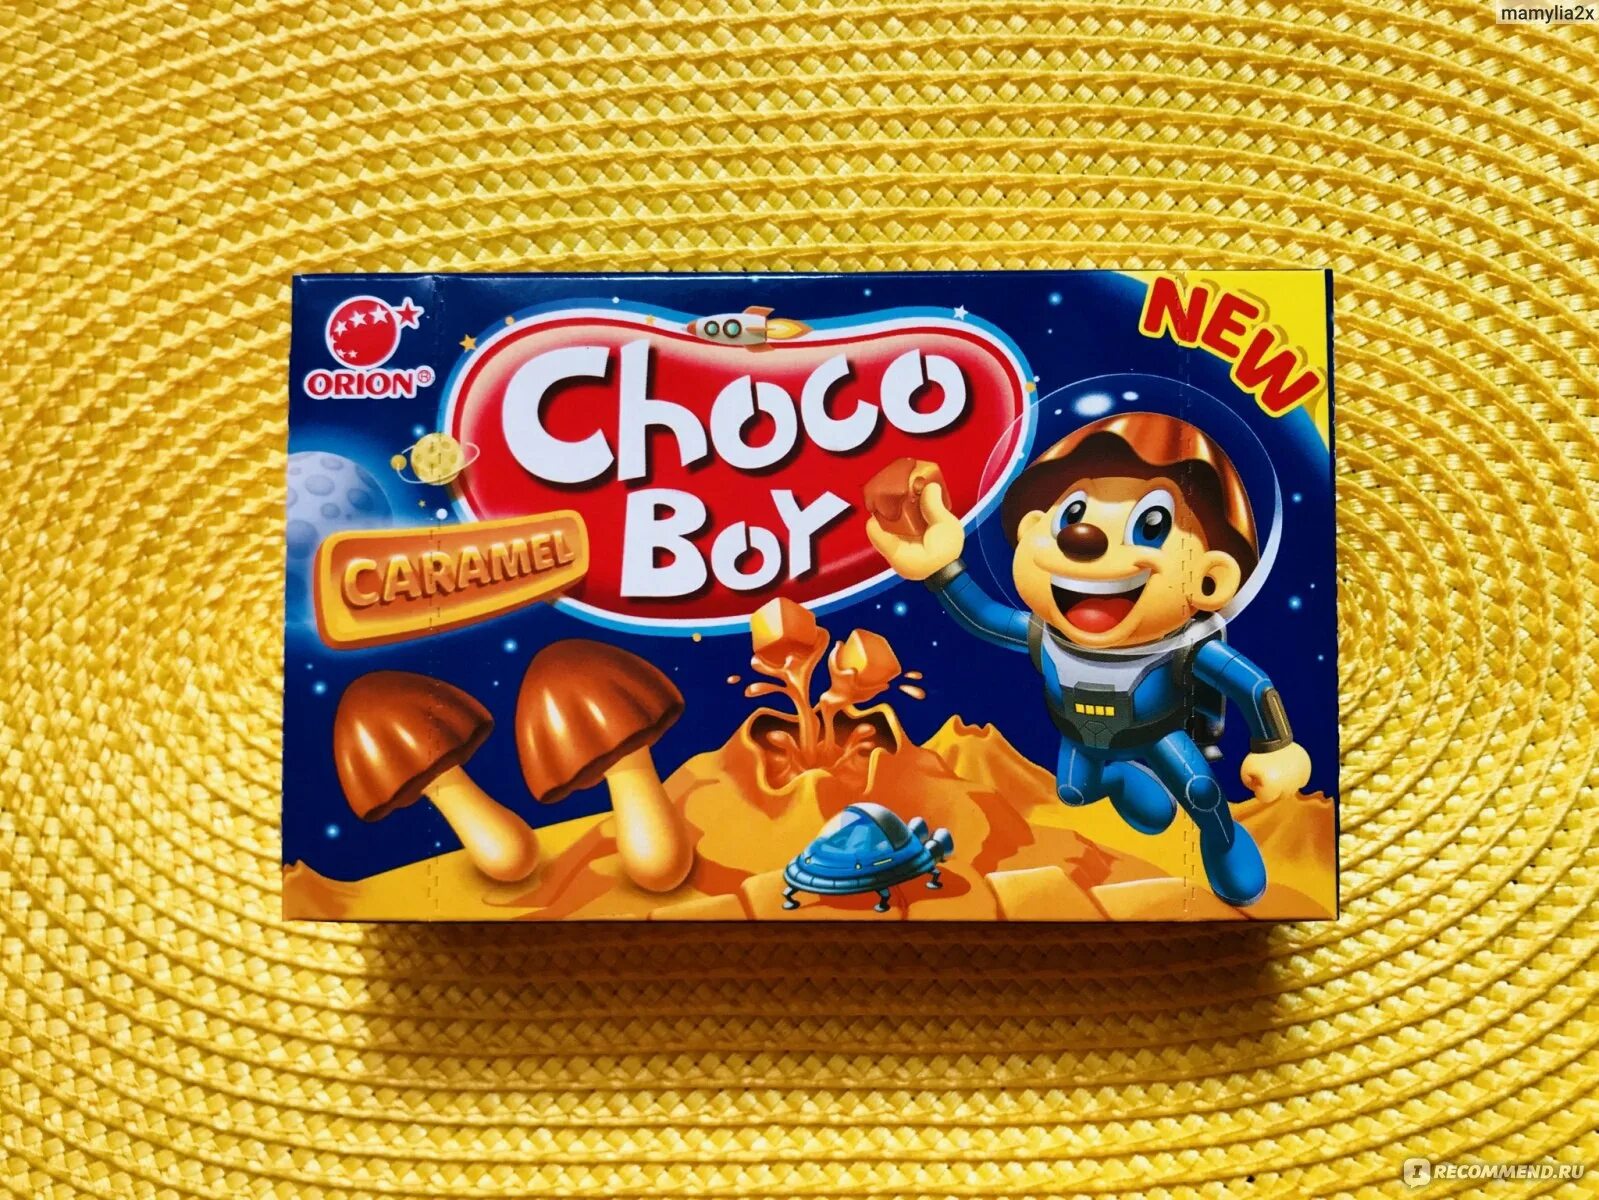 Печенье Чоко бой карамель 45 гр. Печенье Orion Choco boy, карамель. Орион Чоко бой. Орион Чоко бой 45г/30. Jelly boy orion